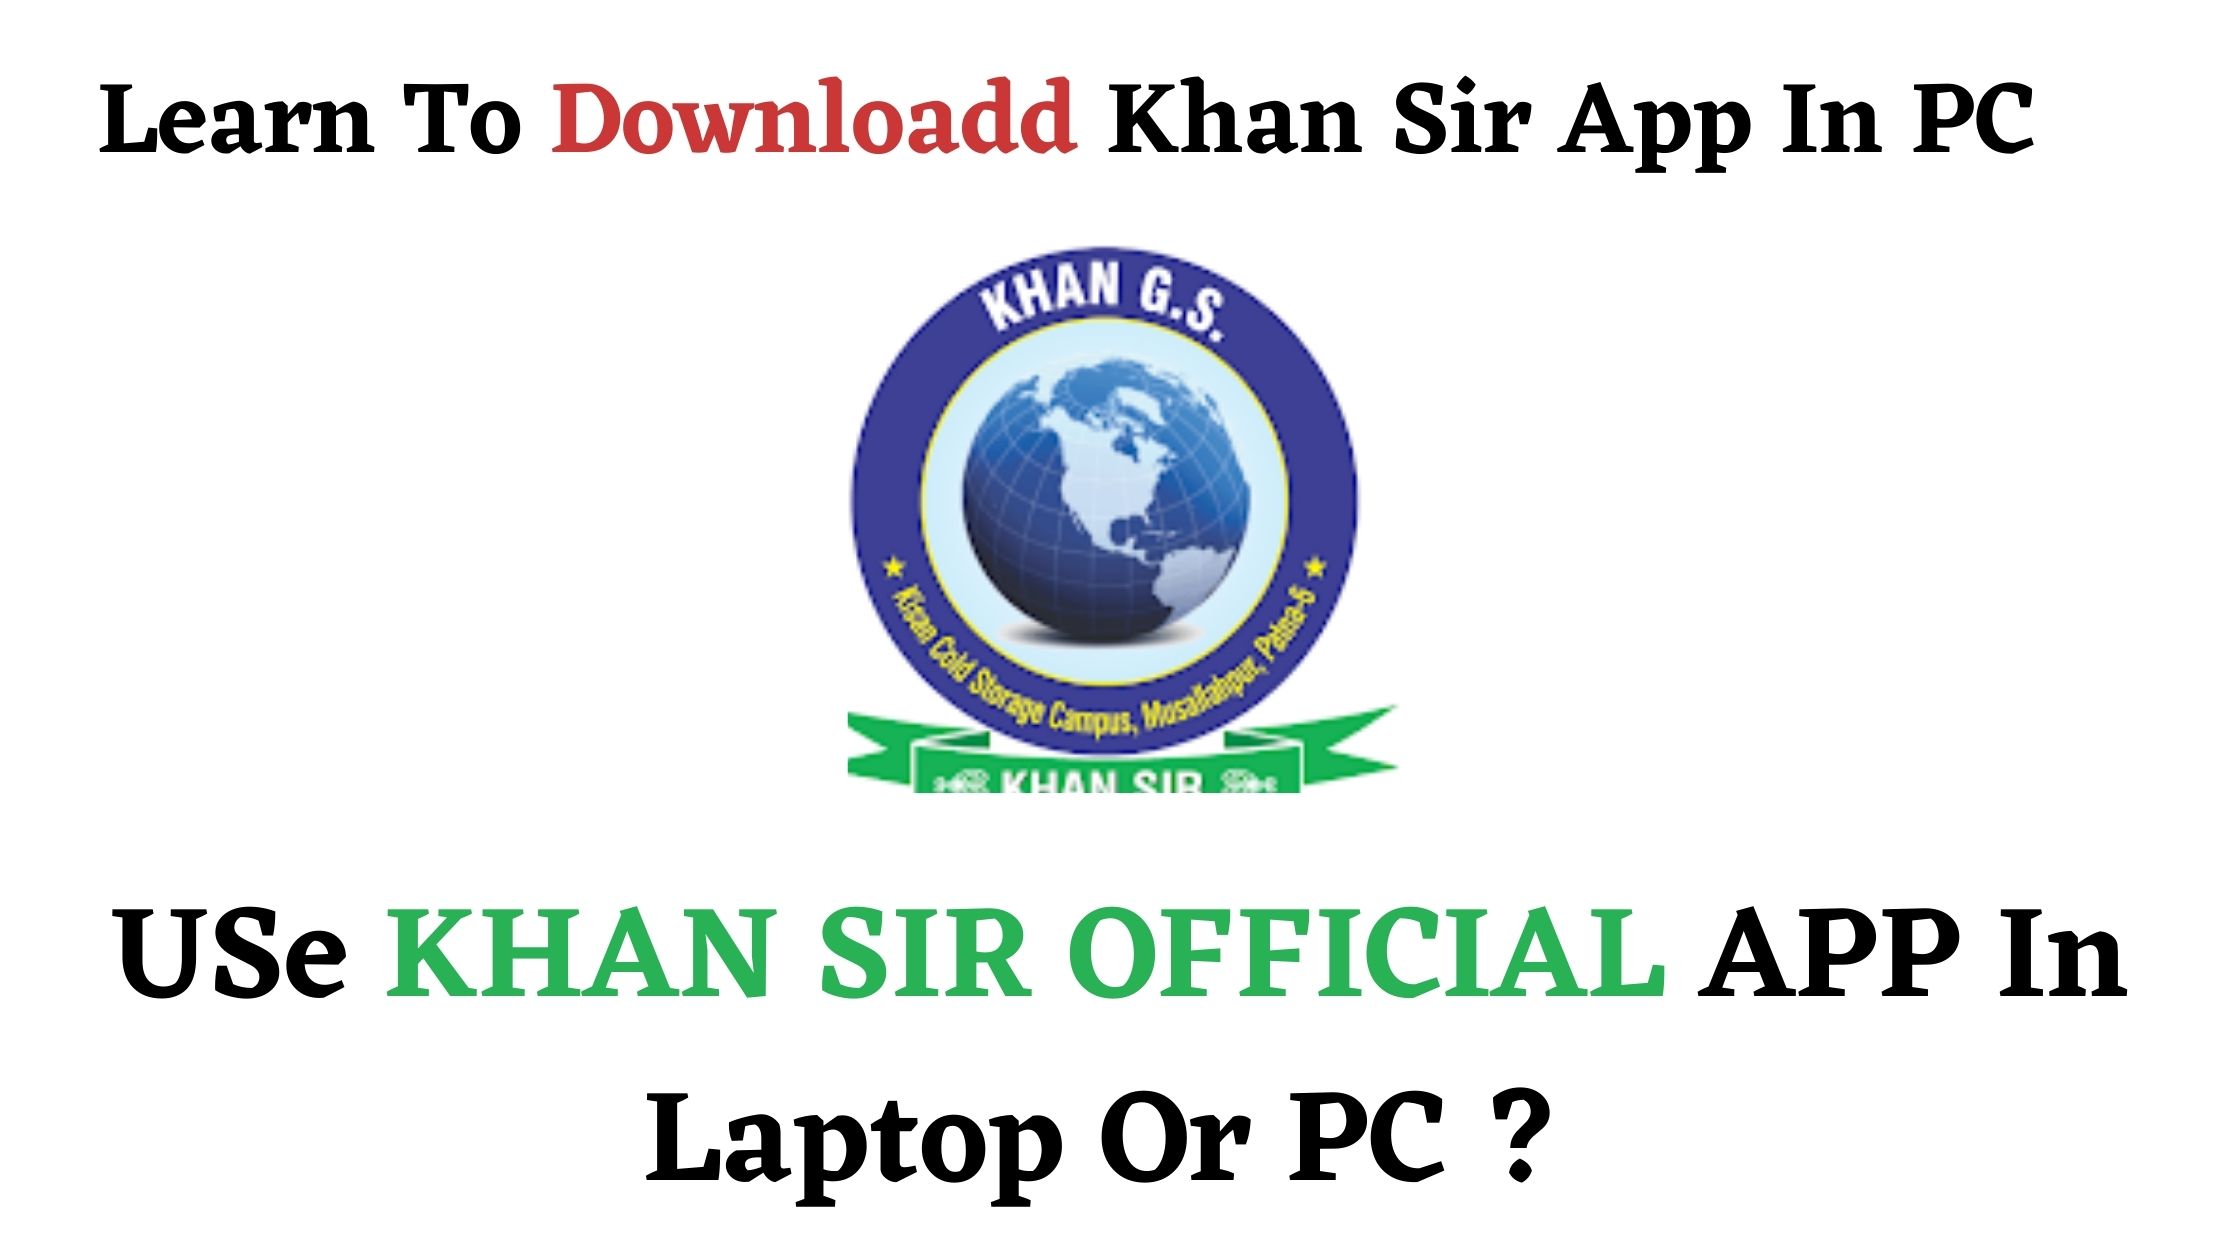 Khan sir Official App For PC